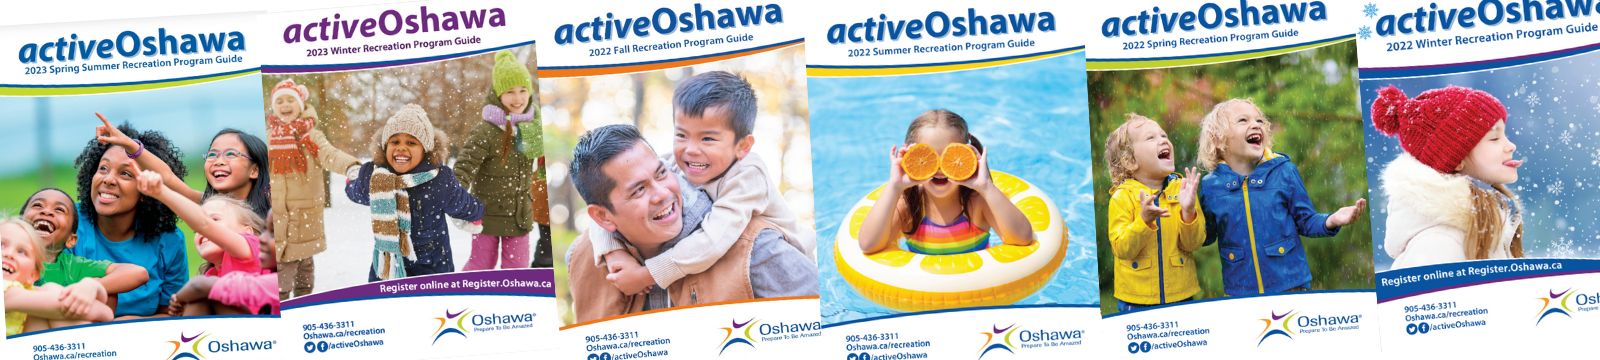 activeOshawa Guide Covers